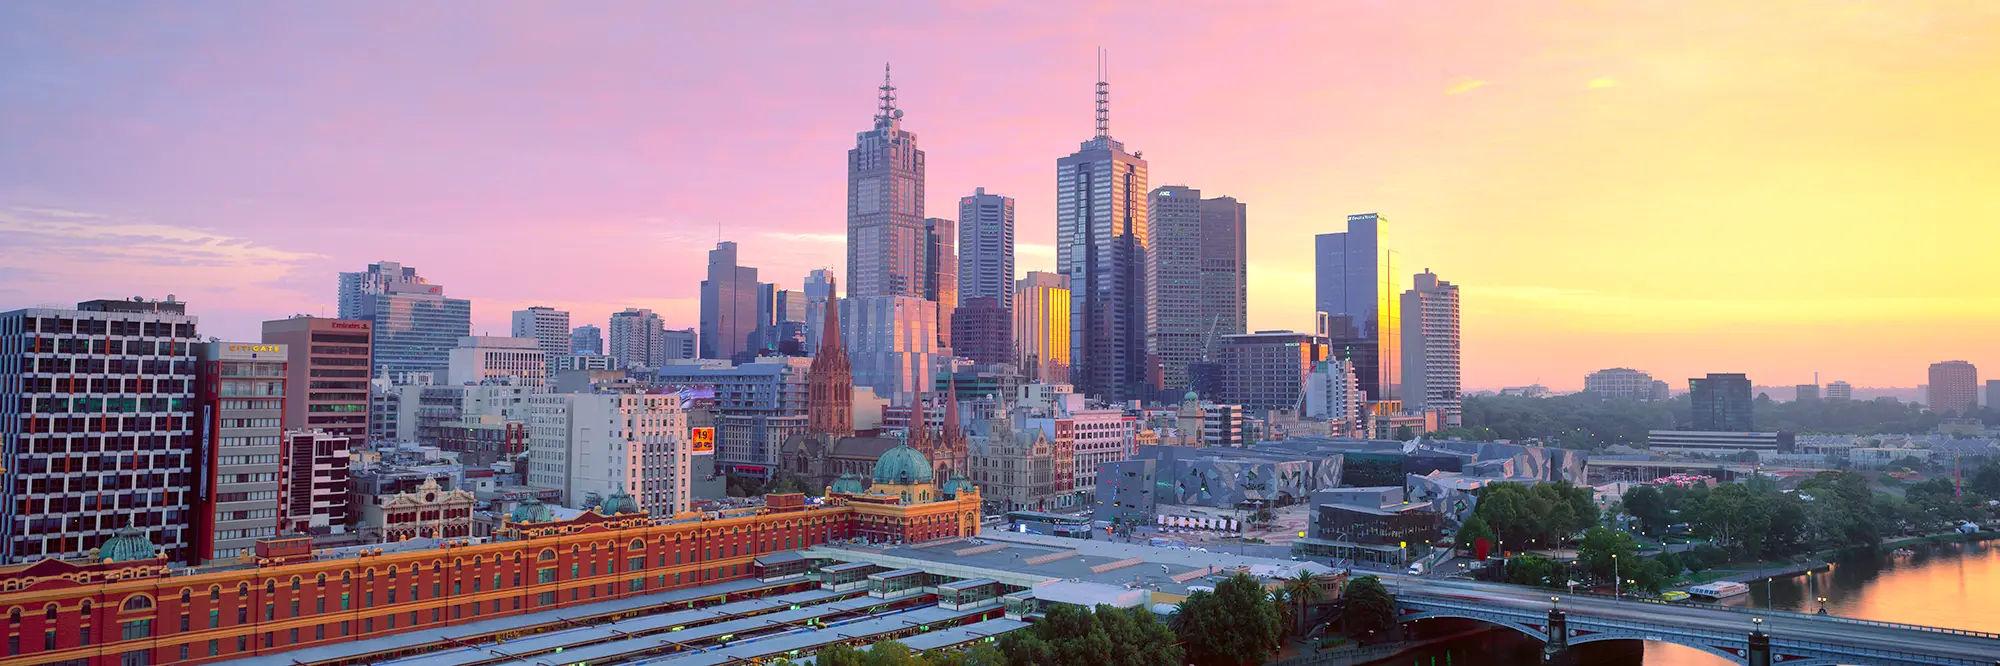 Melbourne City Sunrise Panoramic Photo